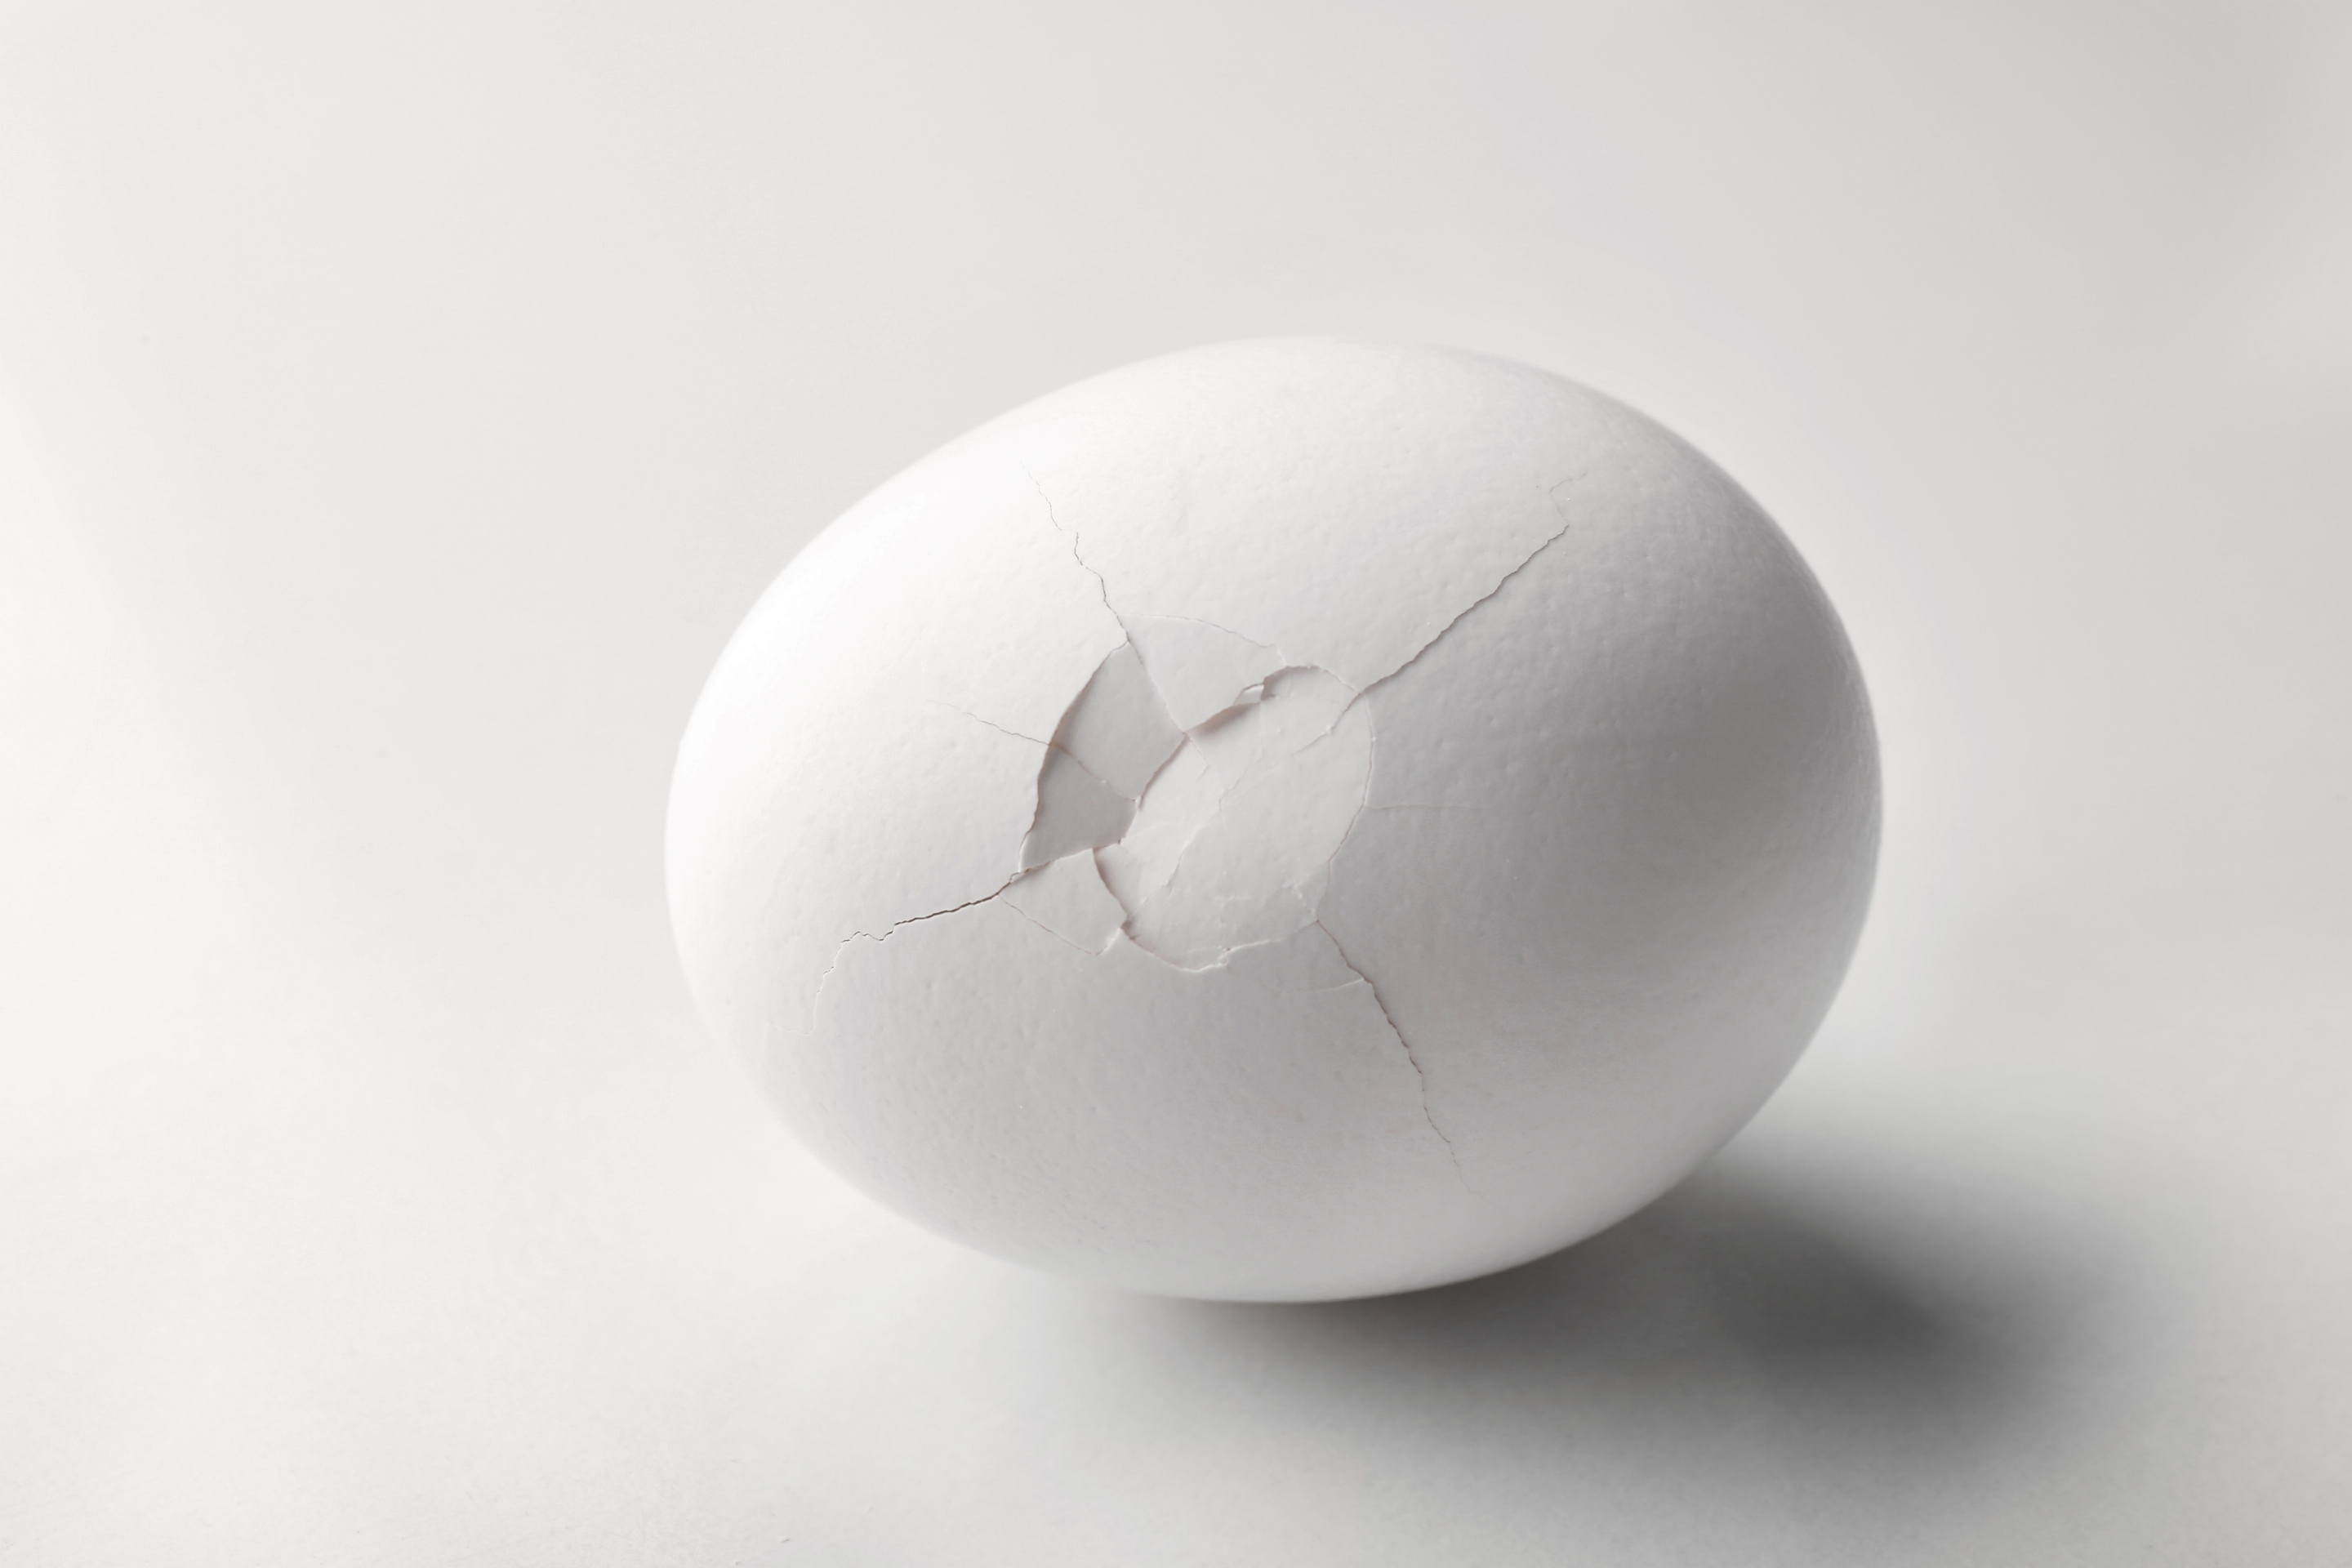 Яйцо трещина. Яйцо с трещиной. Белое яйцо с трещиной. Яйцо с трещиной на белом фоне. Стилизованная трещина на яйце.